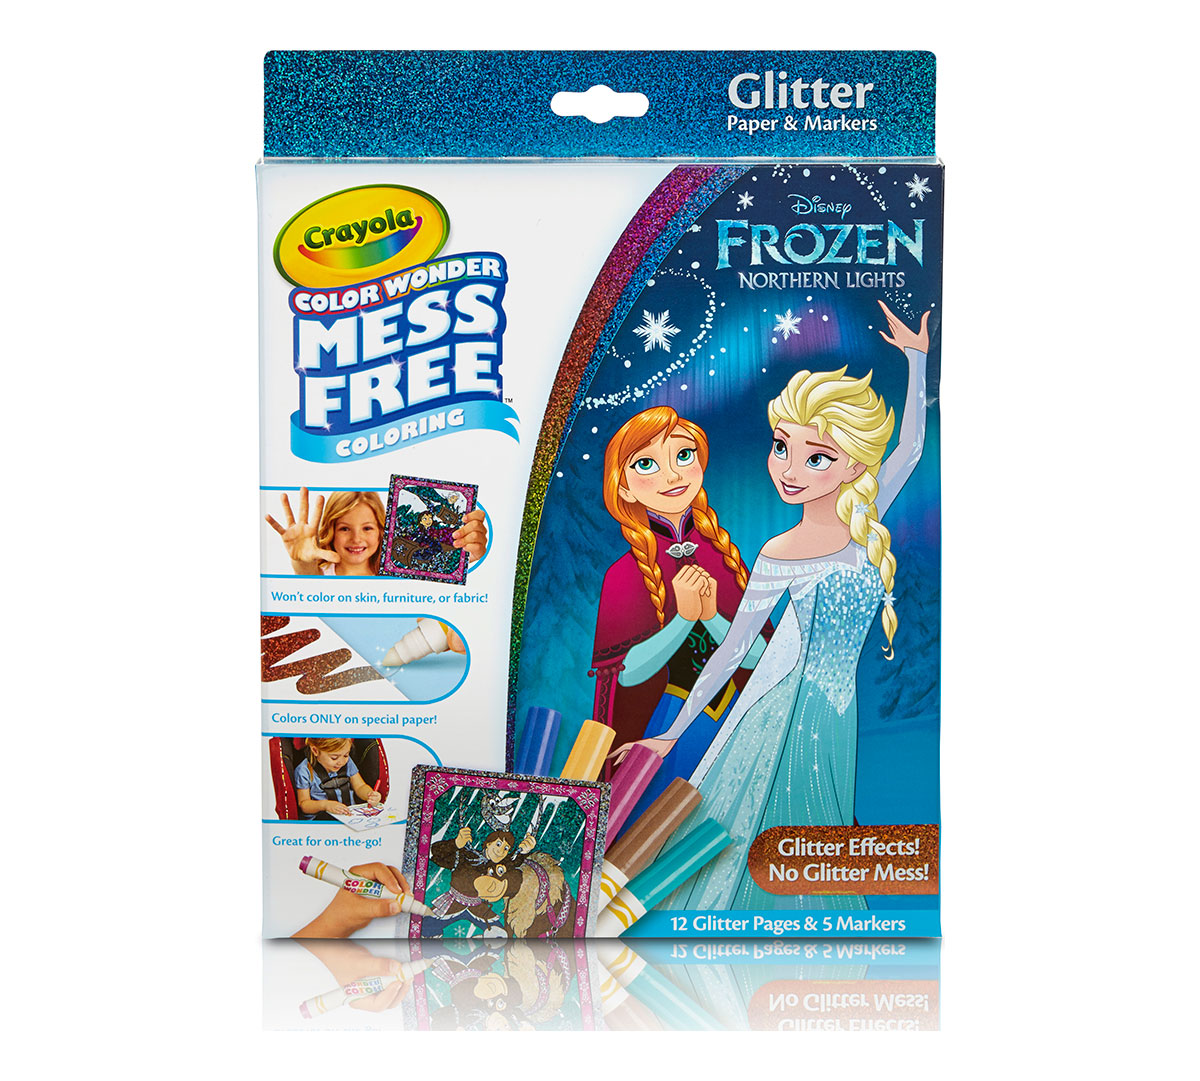 Download Color Wonder Mess Free Glitter Paper & Markers Box Set, Disney Frozen | Crayola